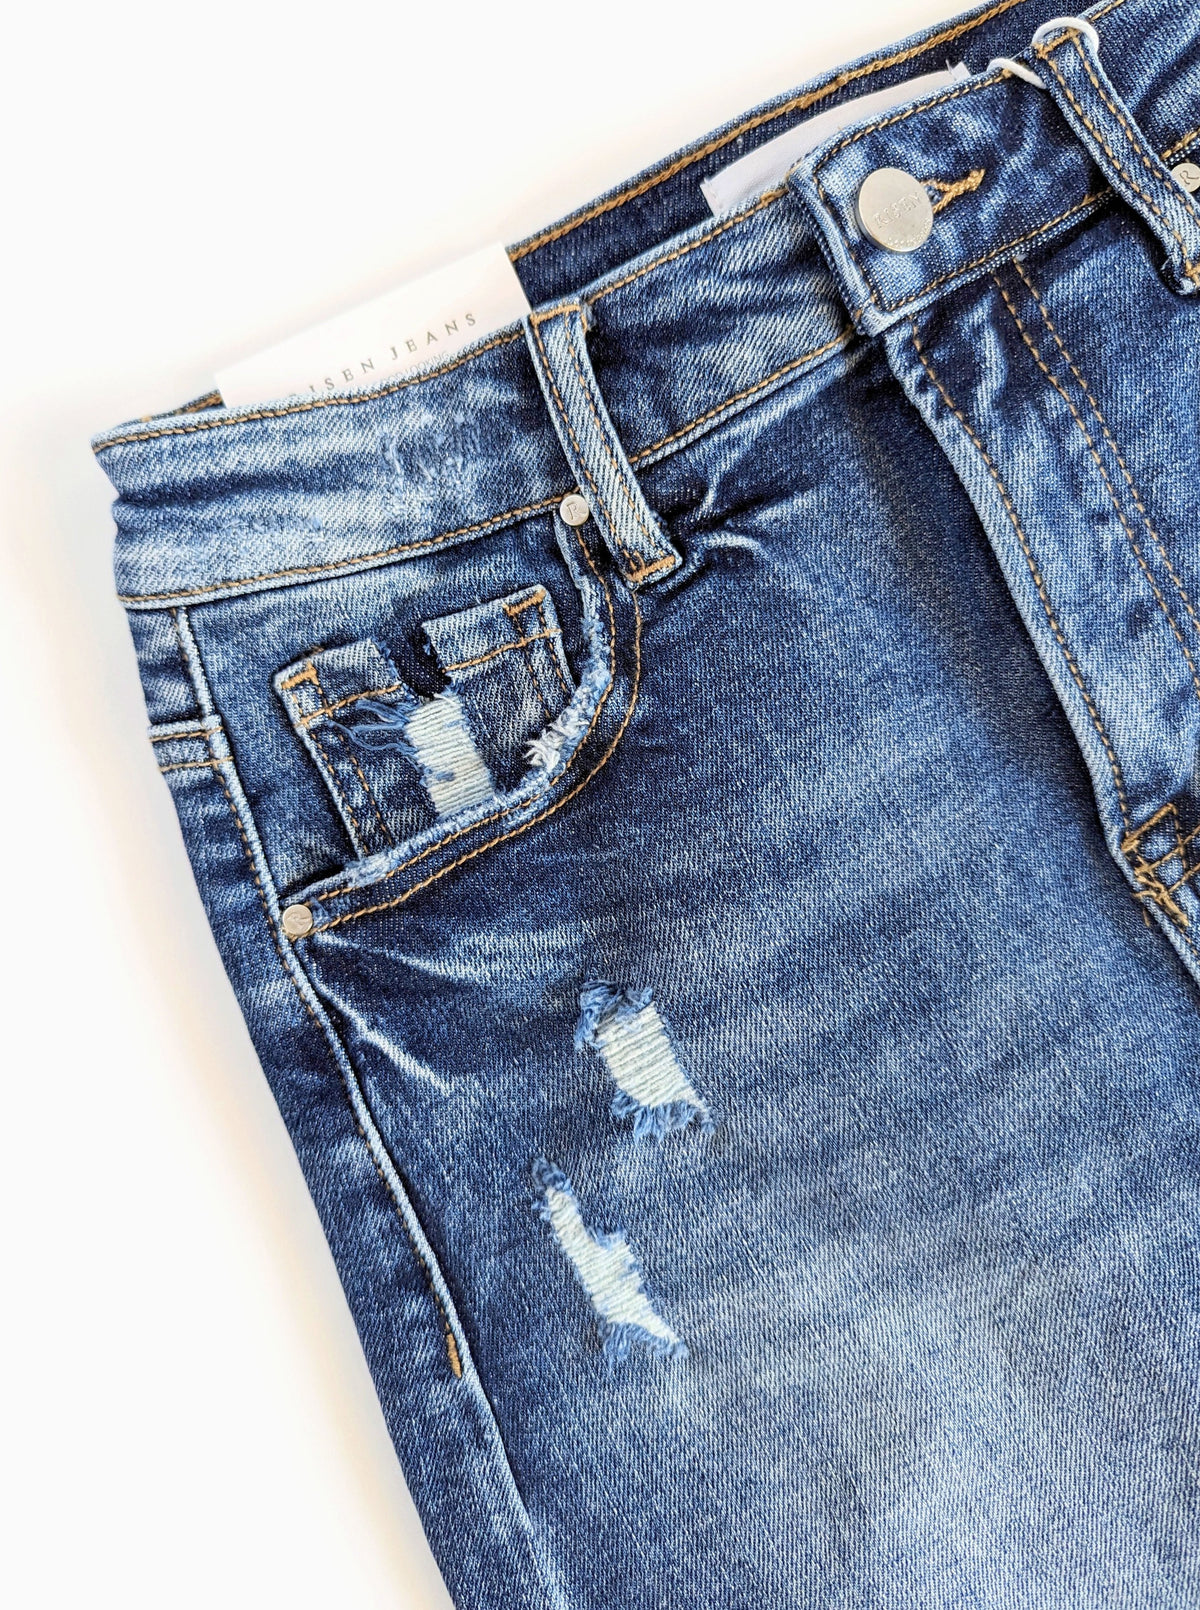 High-Rise Jean Skirt | Medium Wash